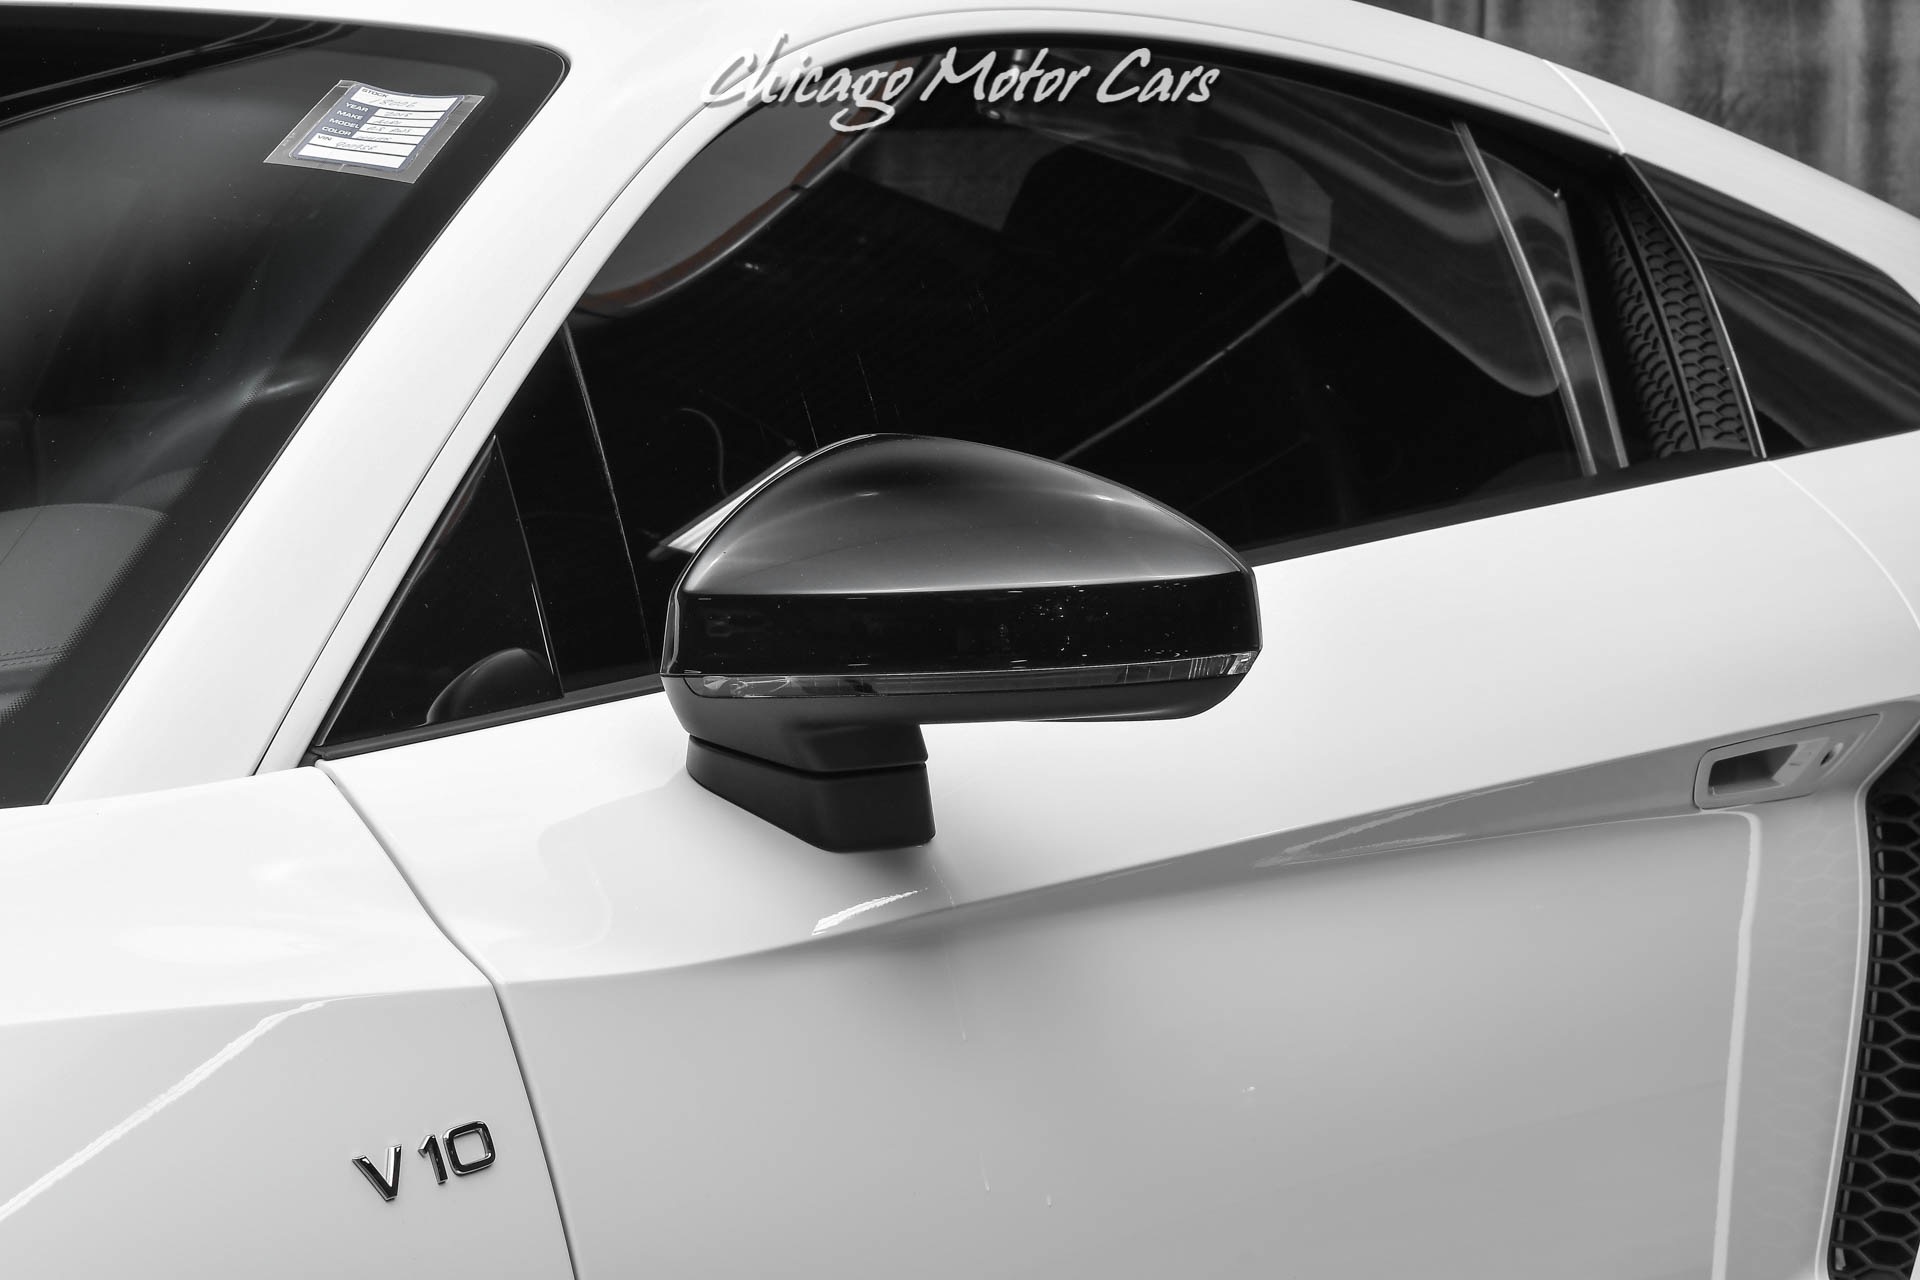 Used-2018-Audi-R8-52L-V10-RWS-Coupe-RARE-Rear-Wheel-Drive-Model-White-Side-Blades